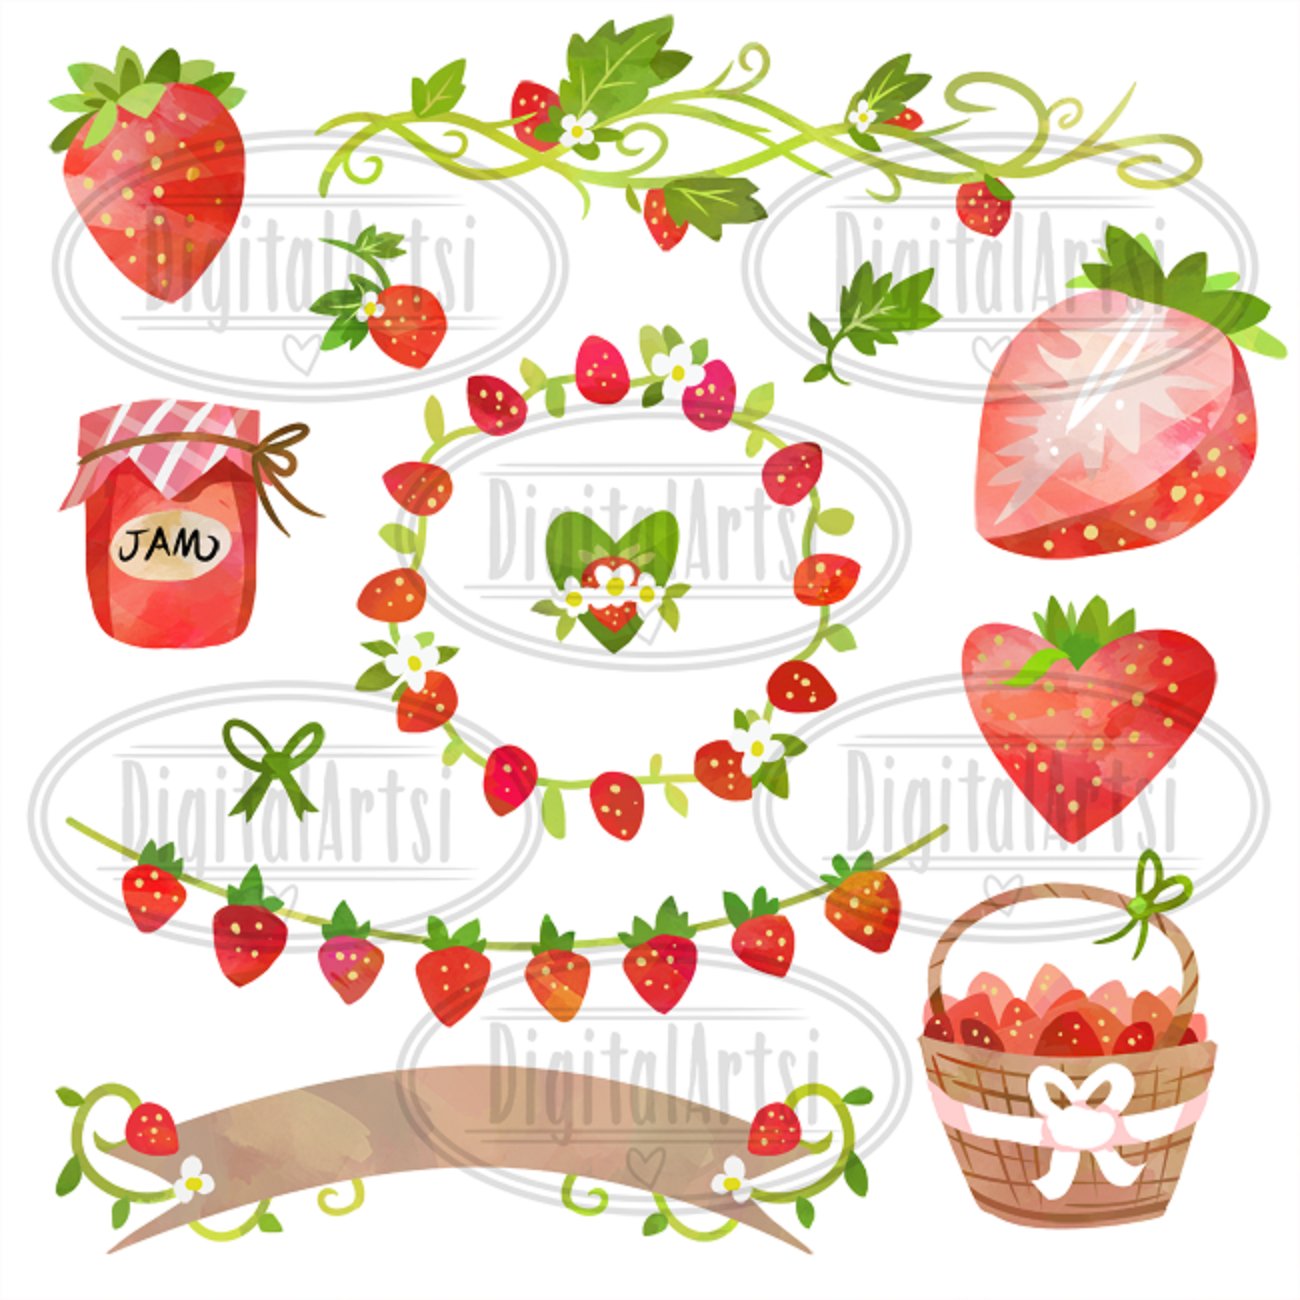 So cute strawberries set.